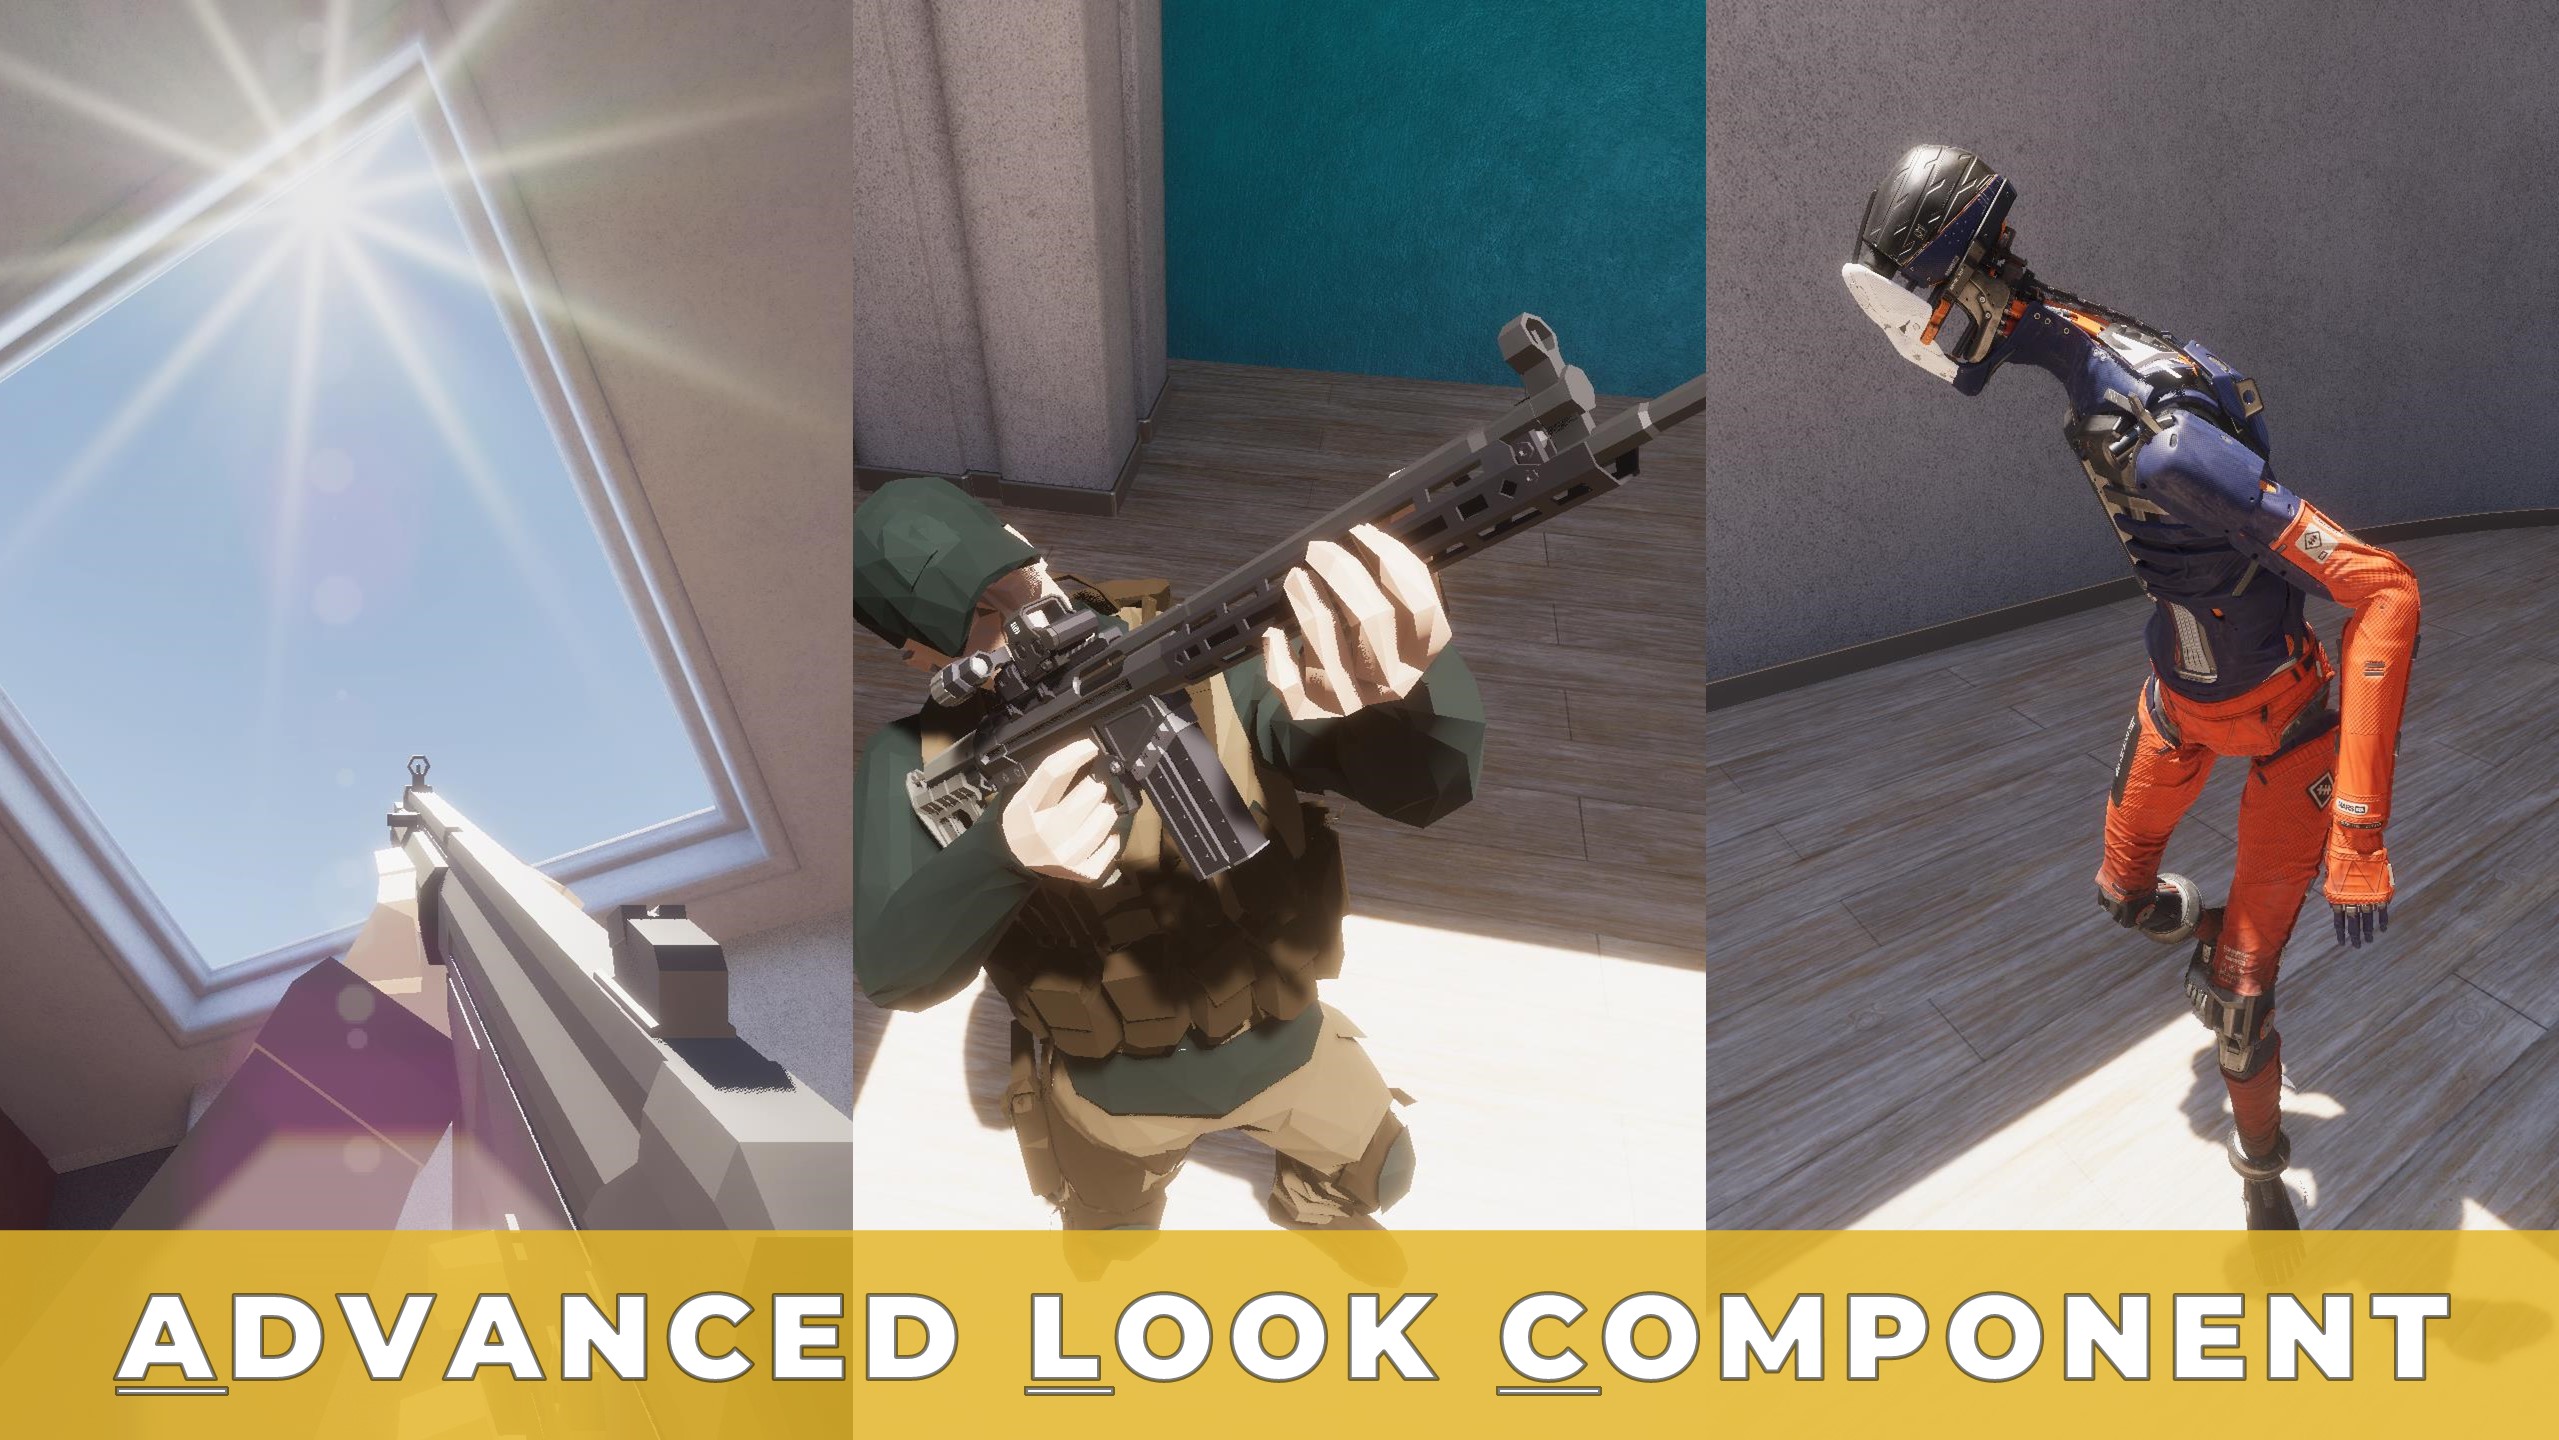 Advanced Look Component Demo